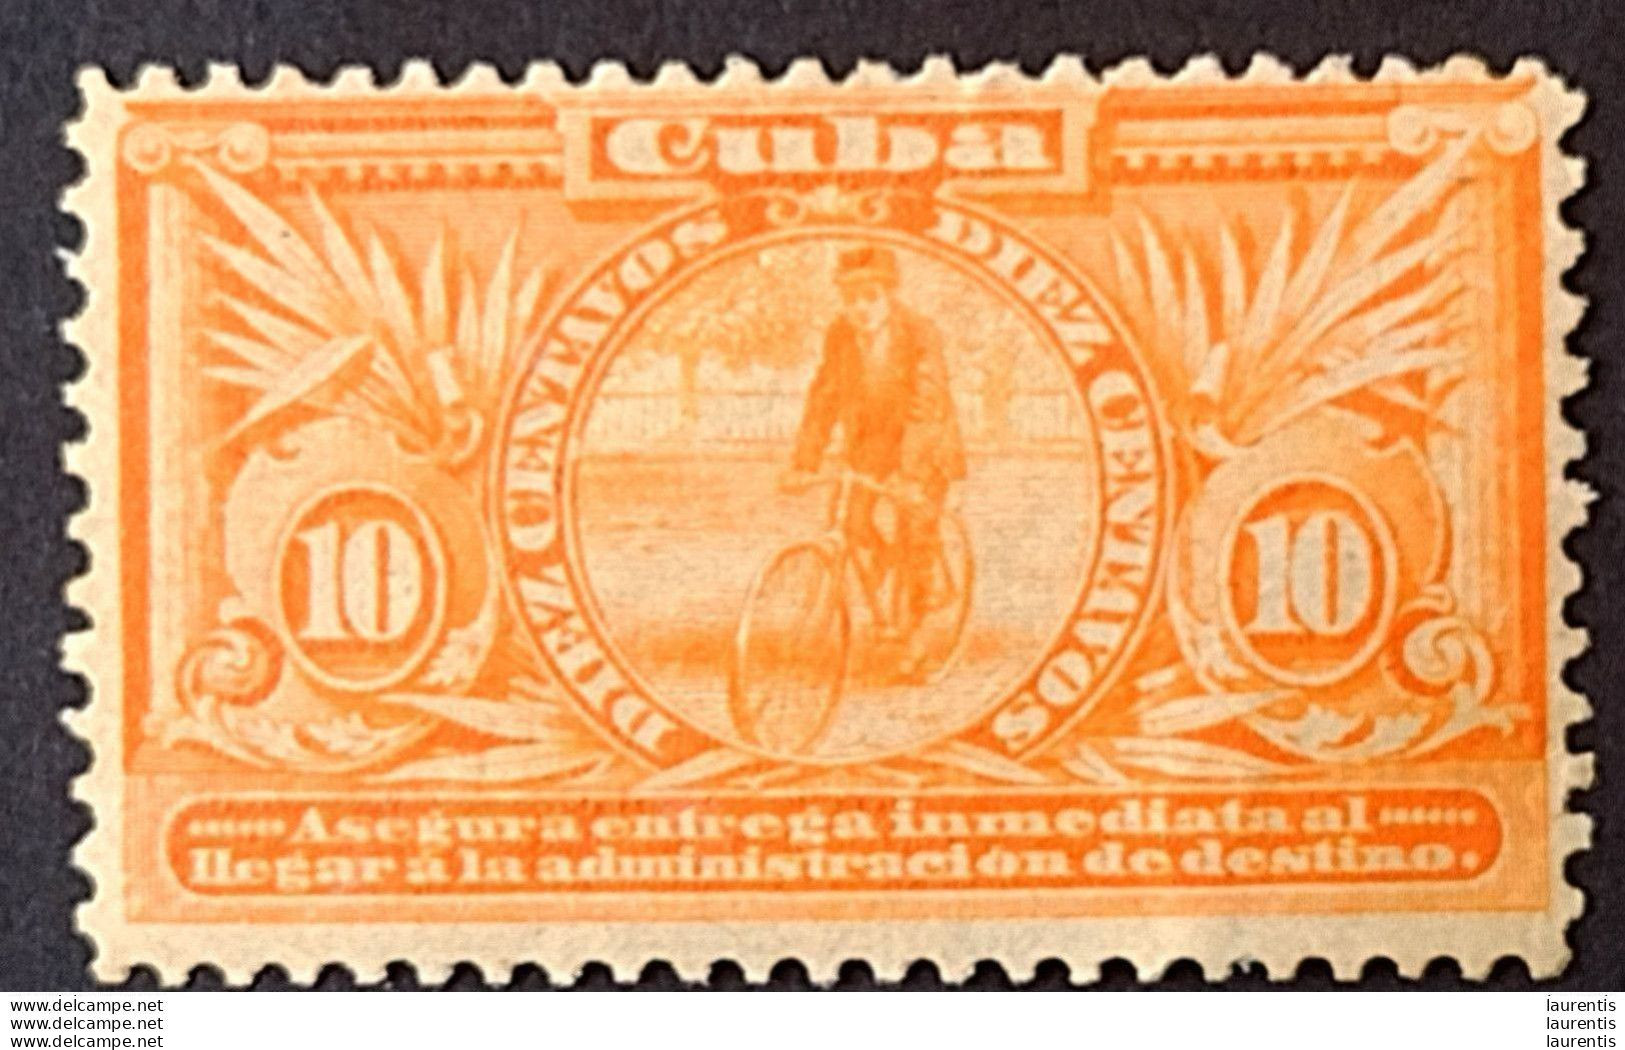 2784  Bicycle - Mailmen - 1902 INMEDIATA - MH - Cb - 2,50 - Vélo